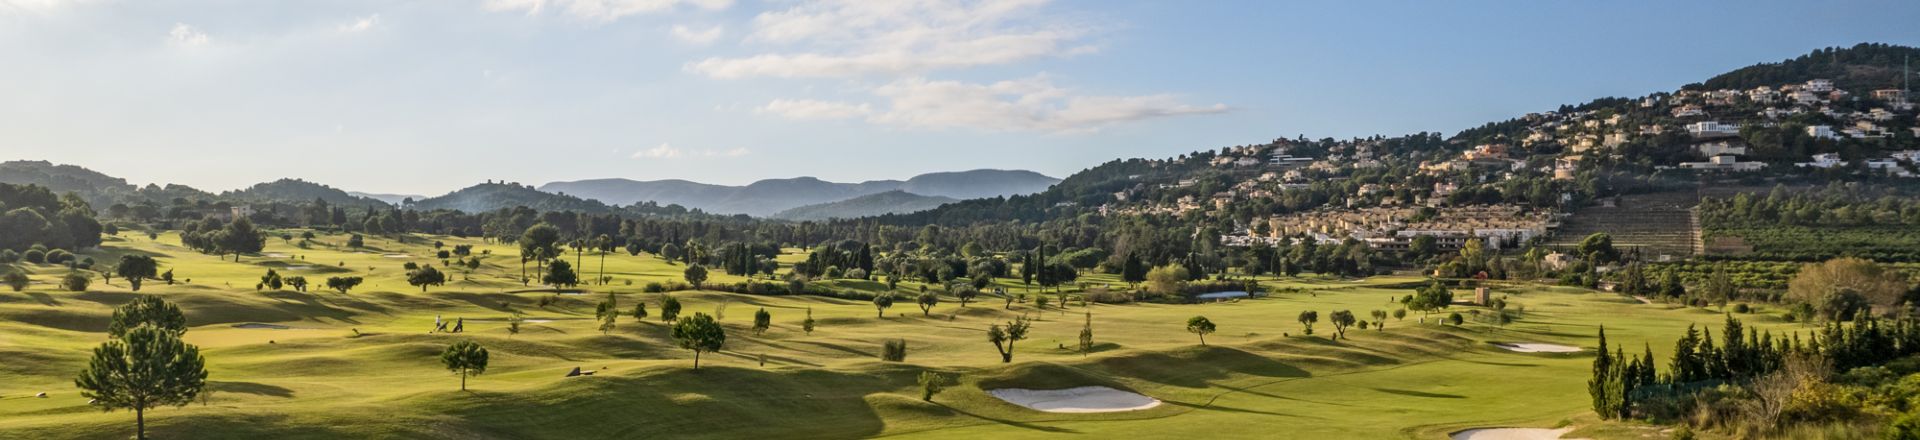 Golf in Spain at La Sella Golf